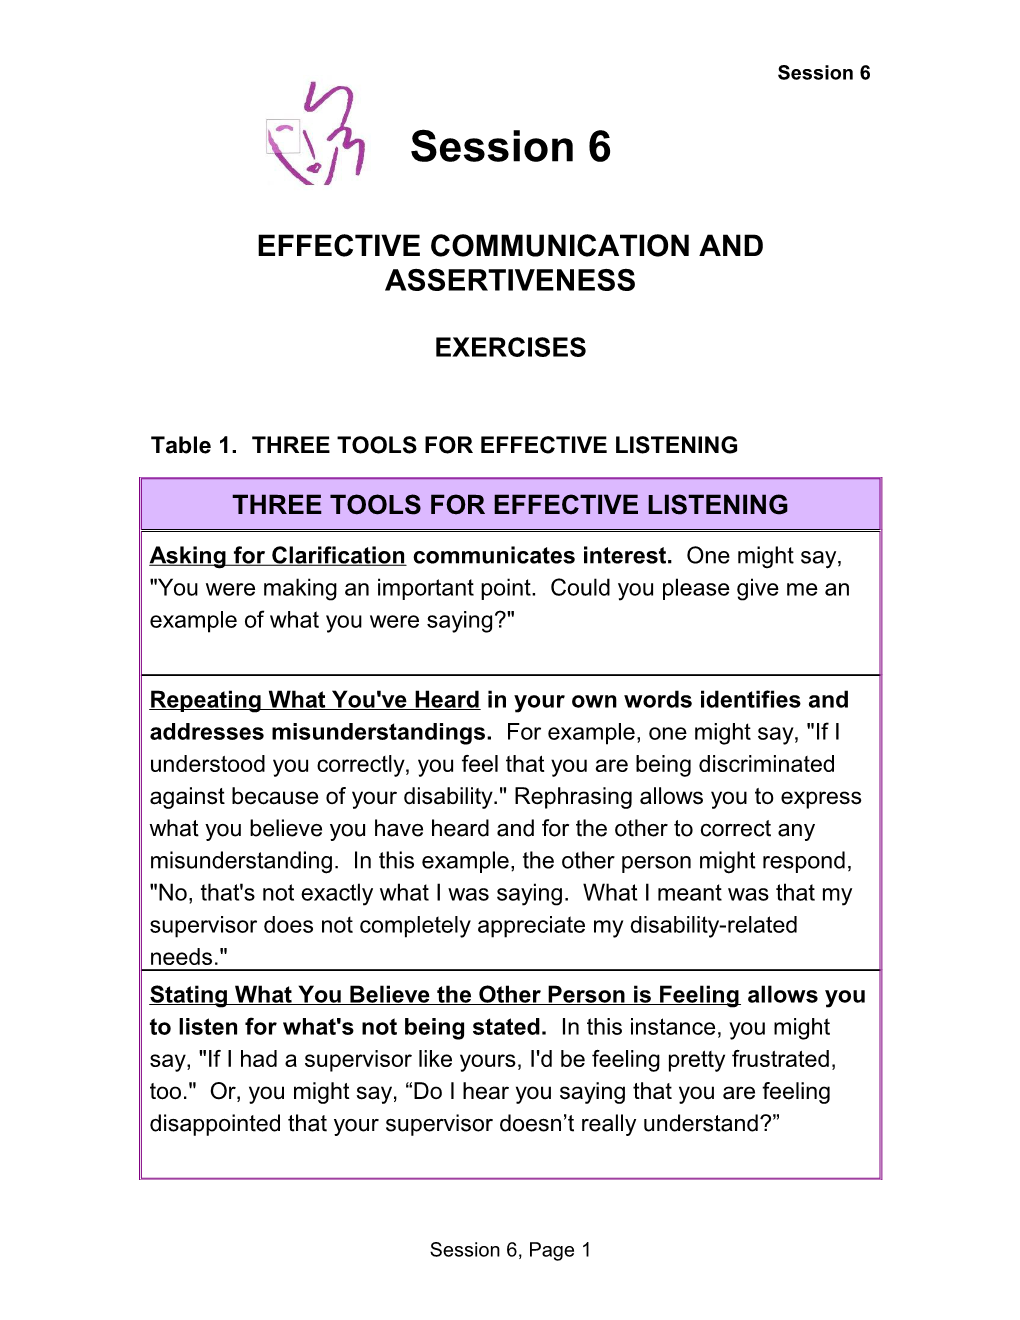 Effective Communication and Assertiveness